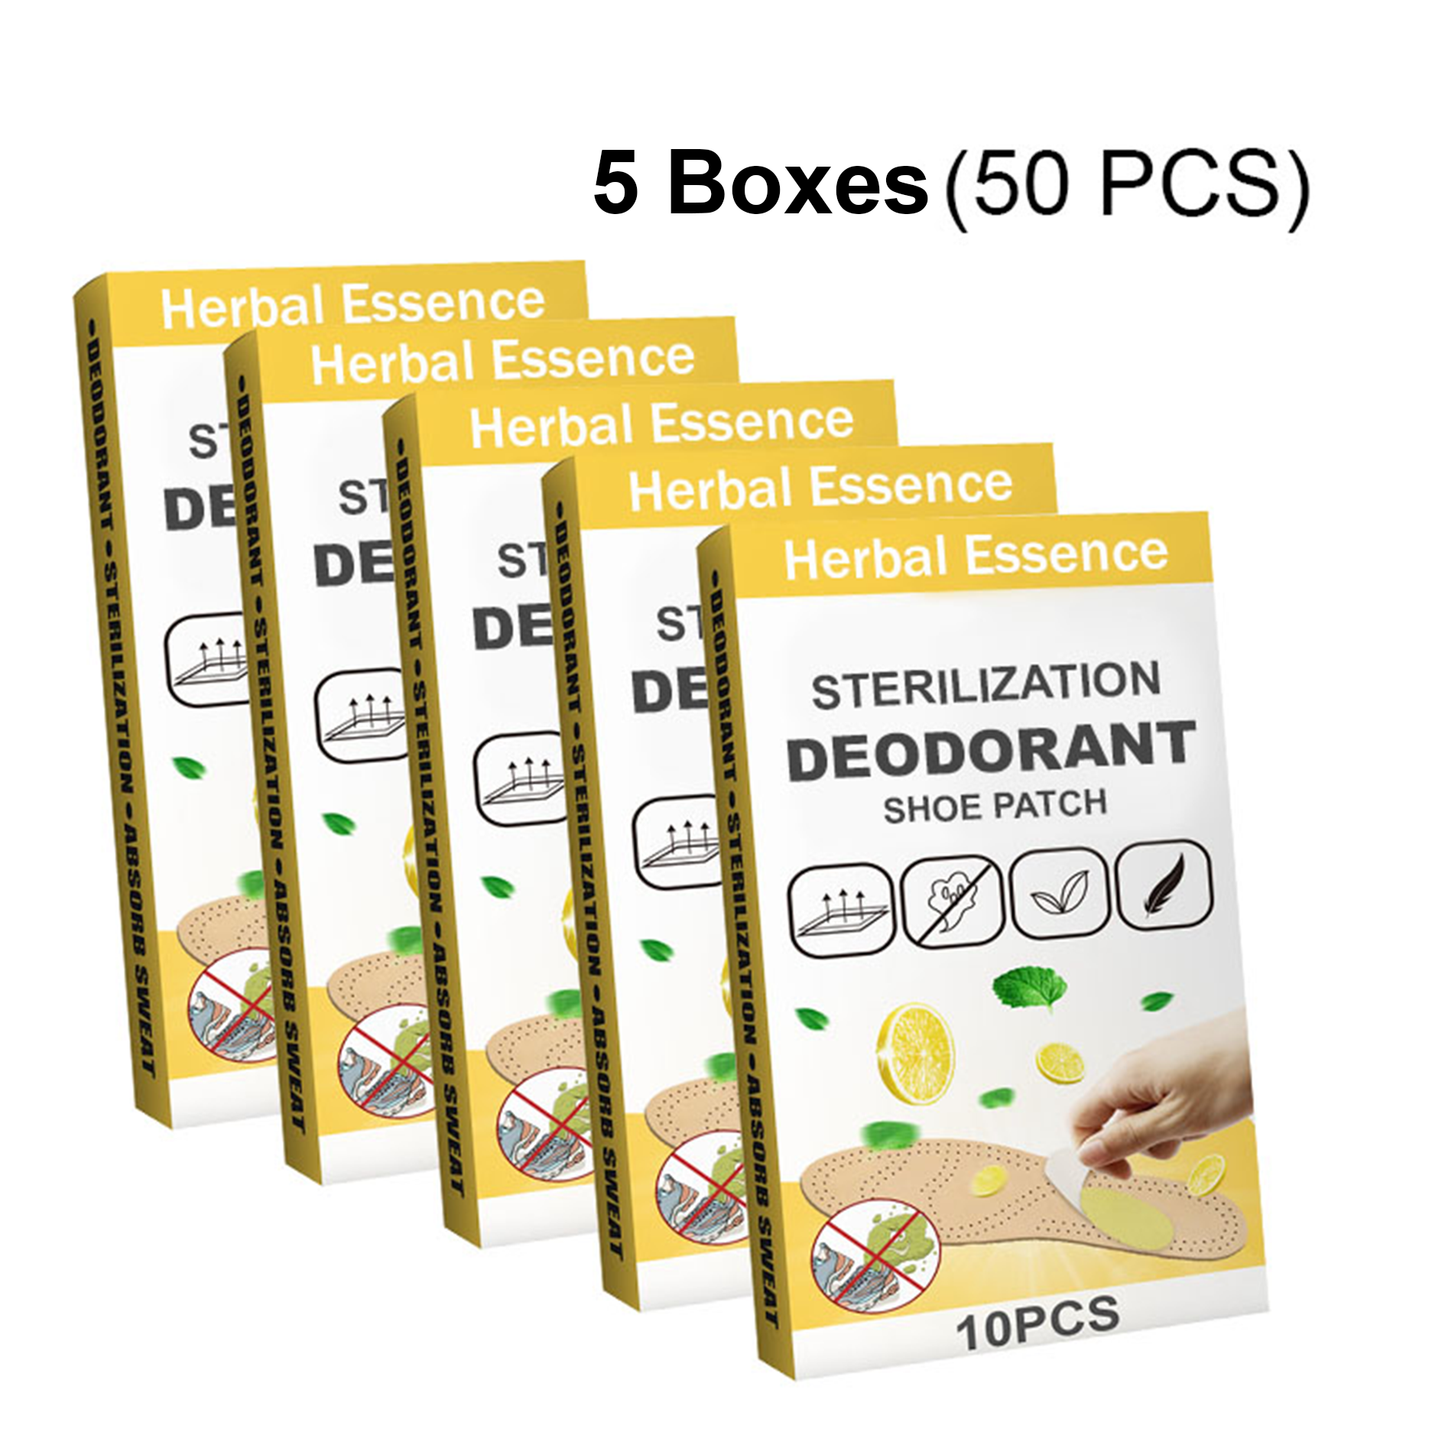 Herbal Essence Deodorant Shoe Patch